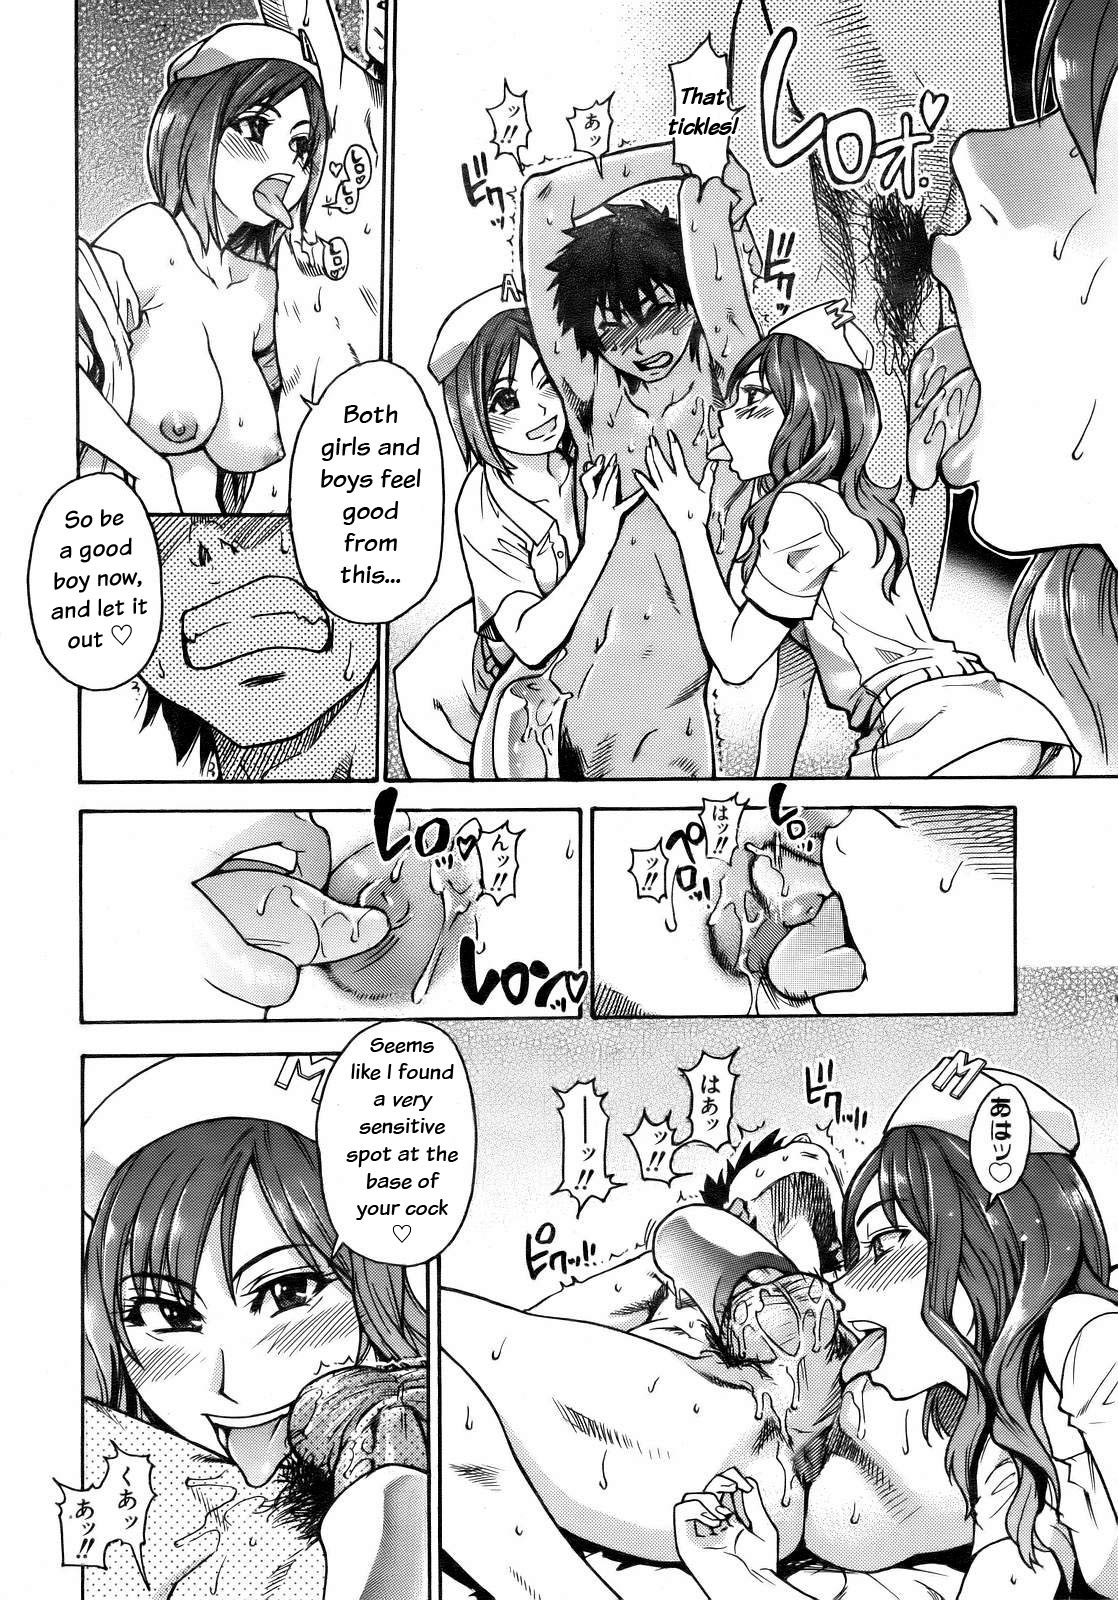 Musume in a House of Vice3 33 hentai manga